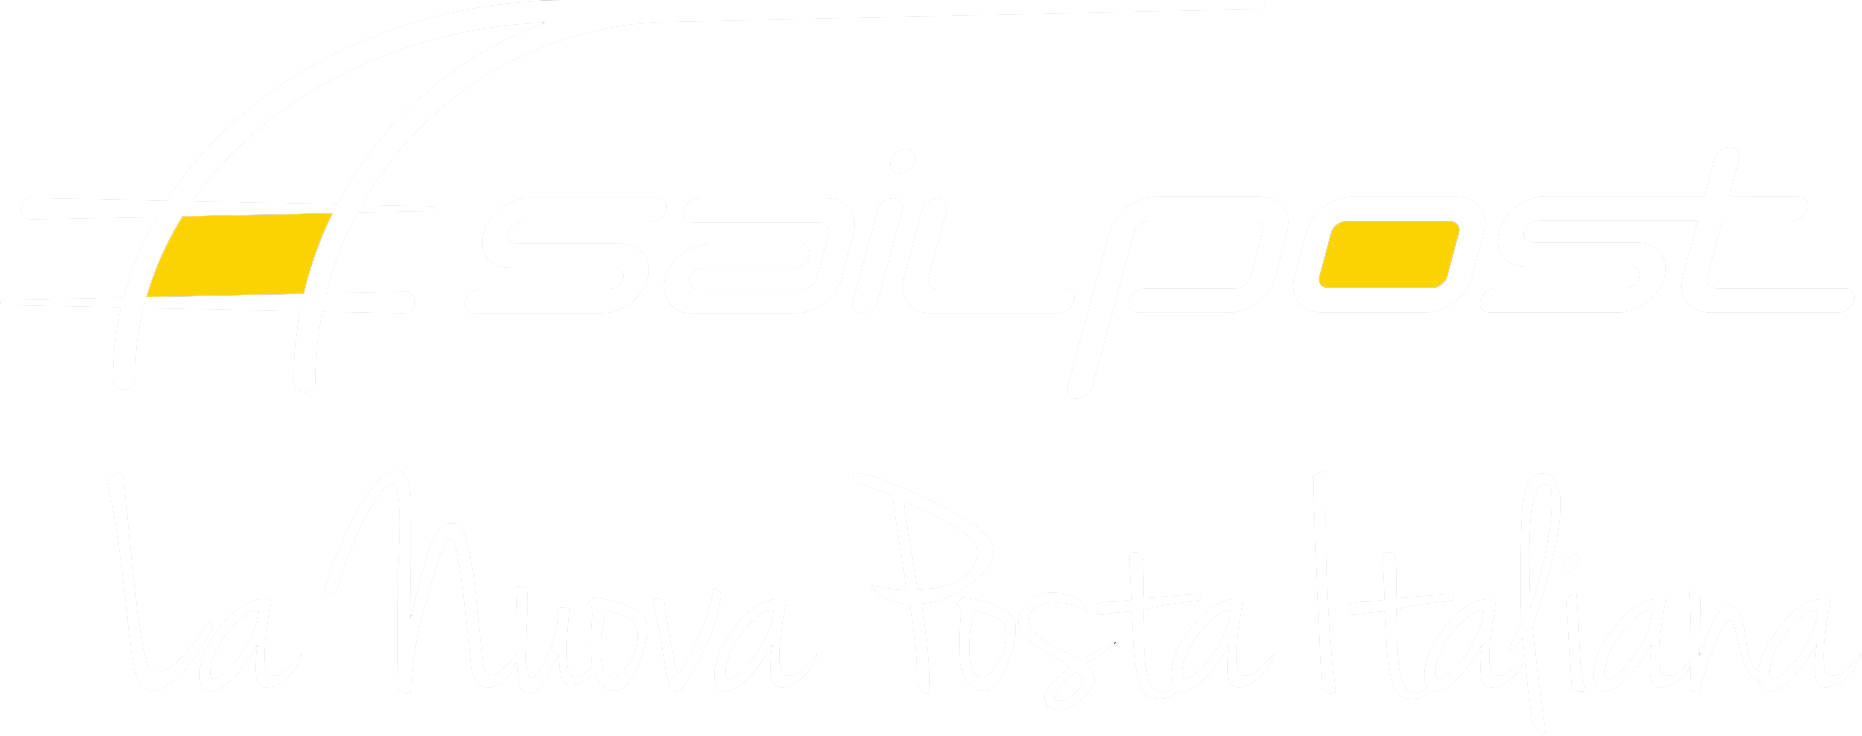 Posta Sailpost logo